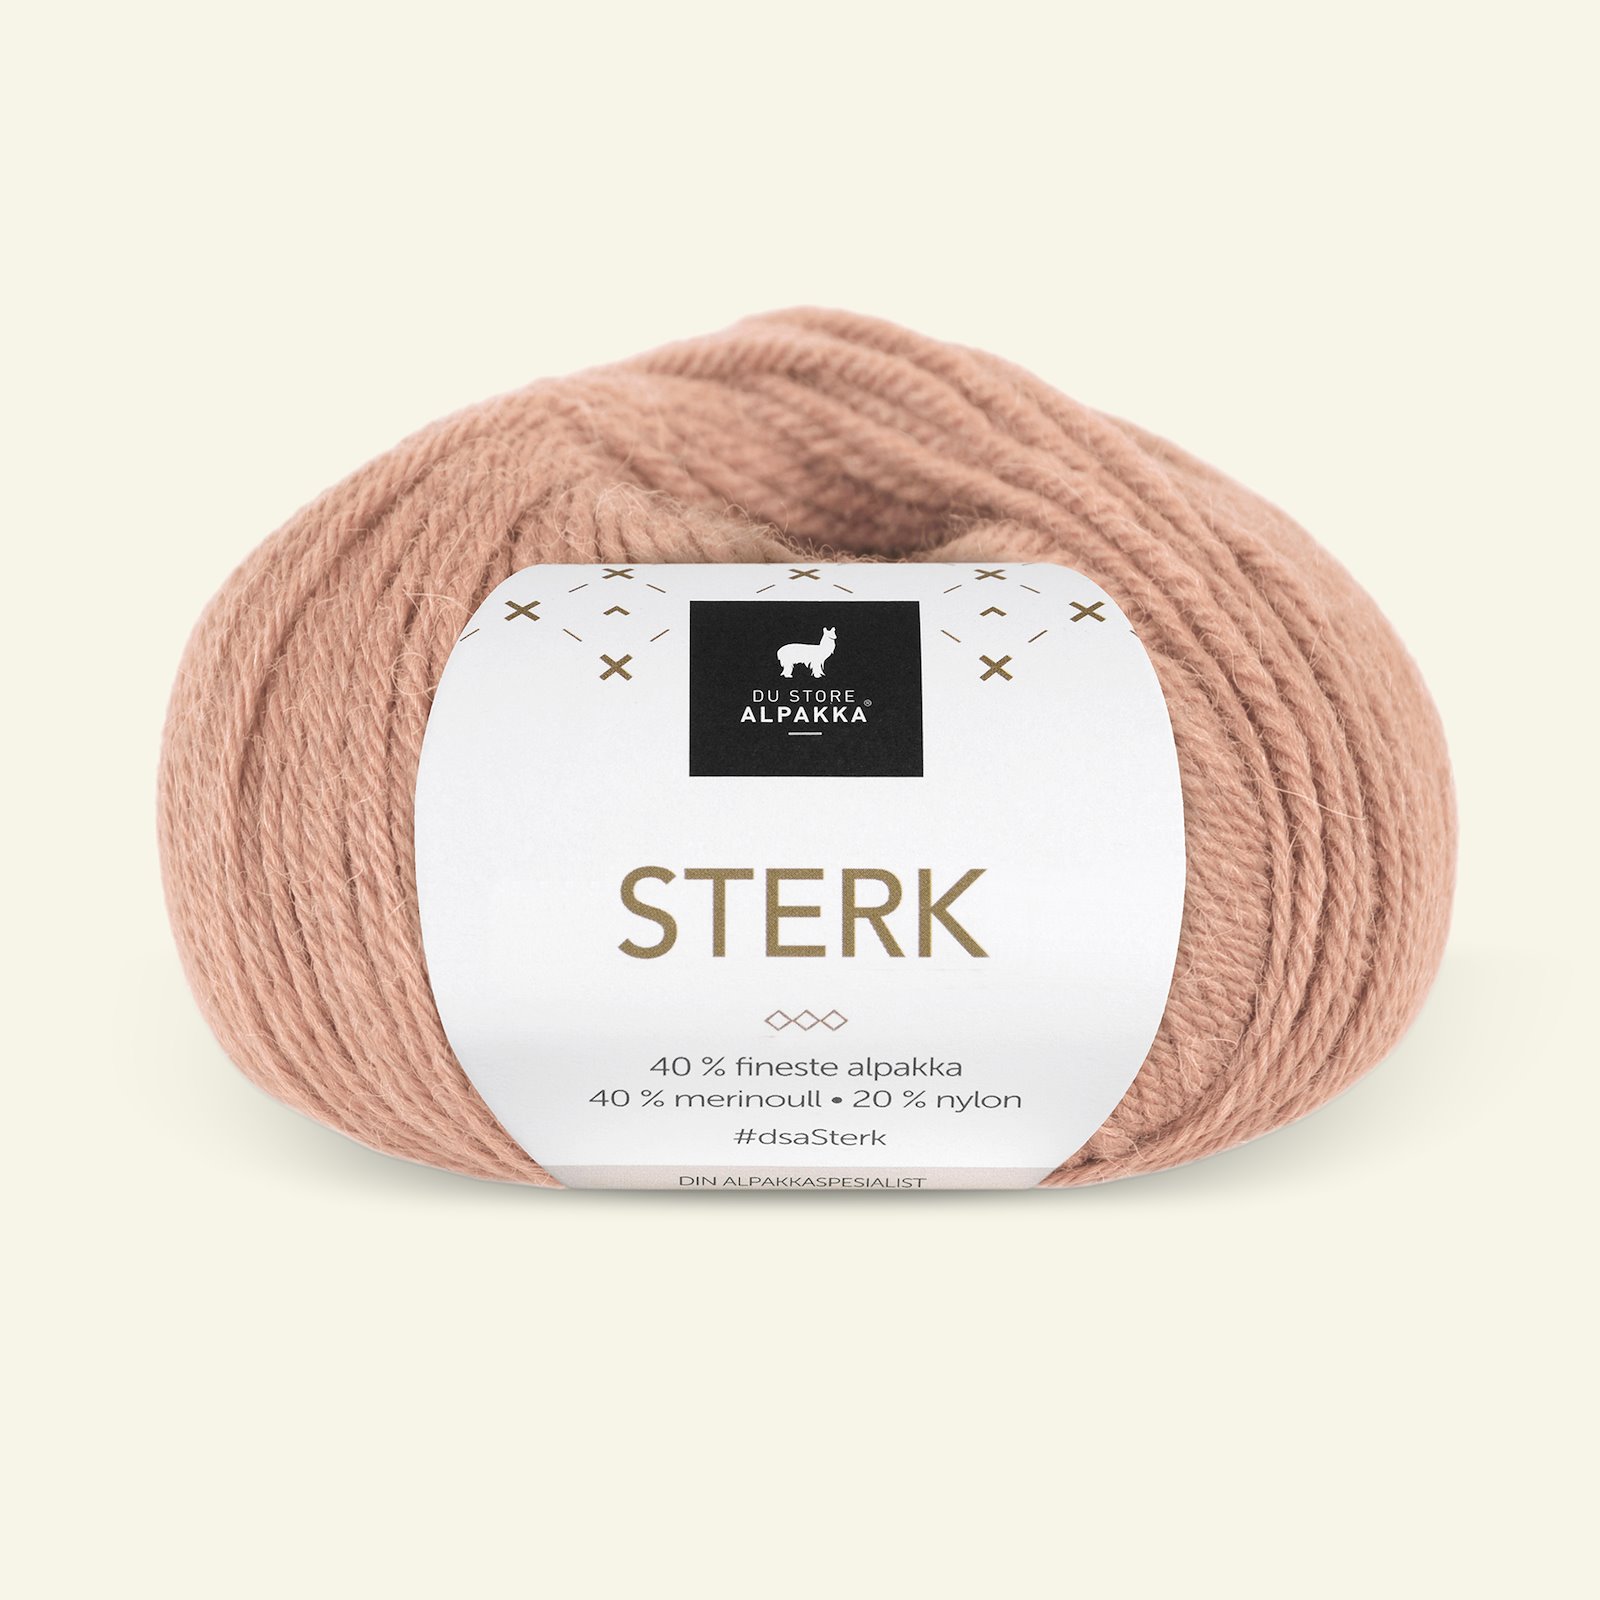 Du Store Alpakka, alpaca merino mixgarn "Sterk", lys karamel (911) 90000703_pack